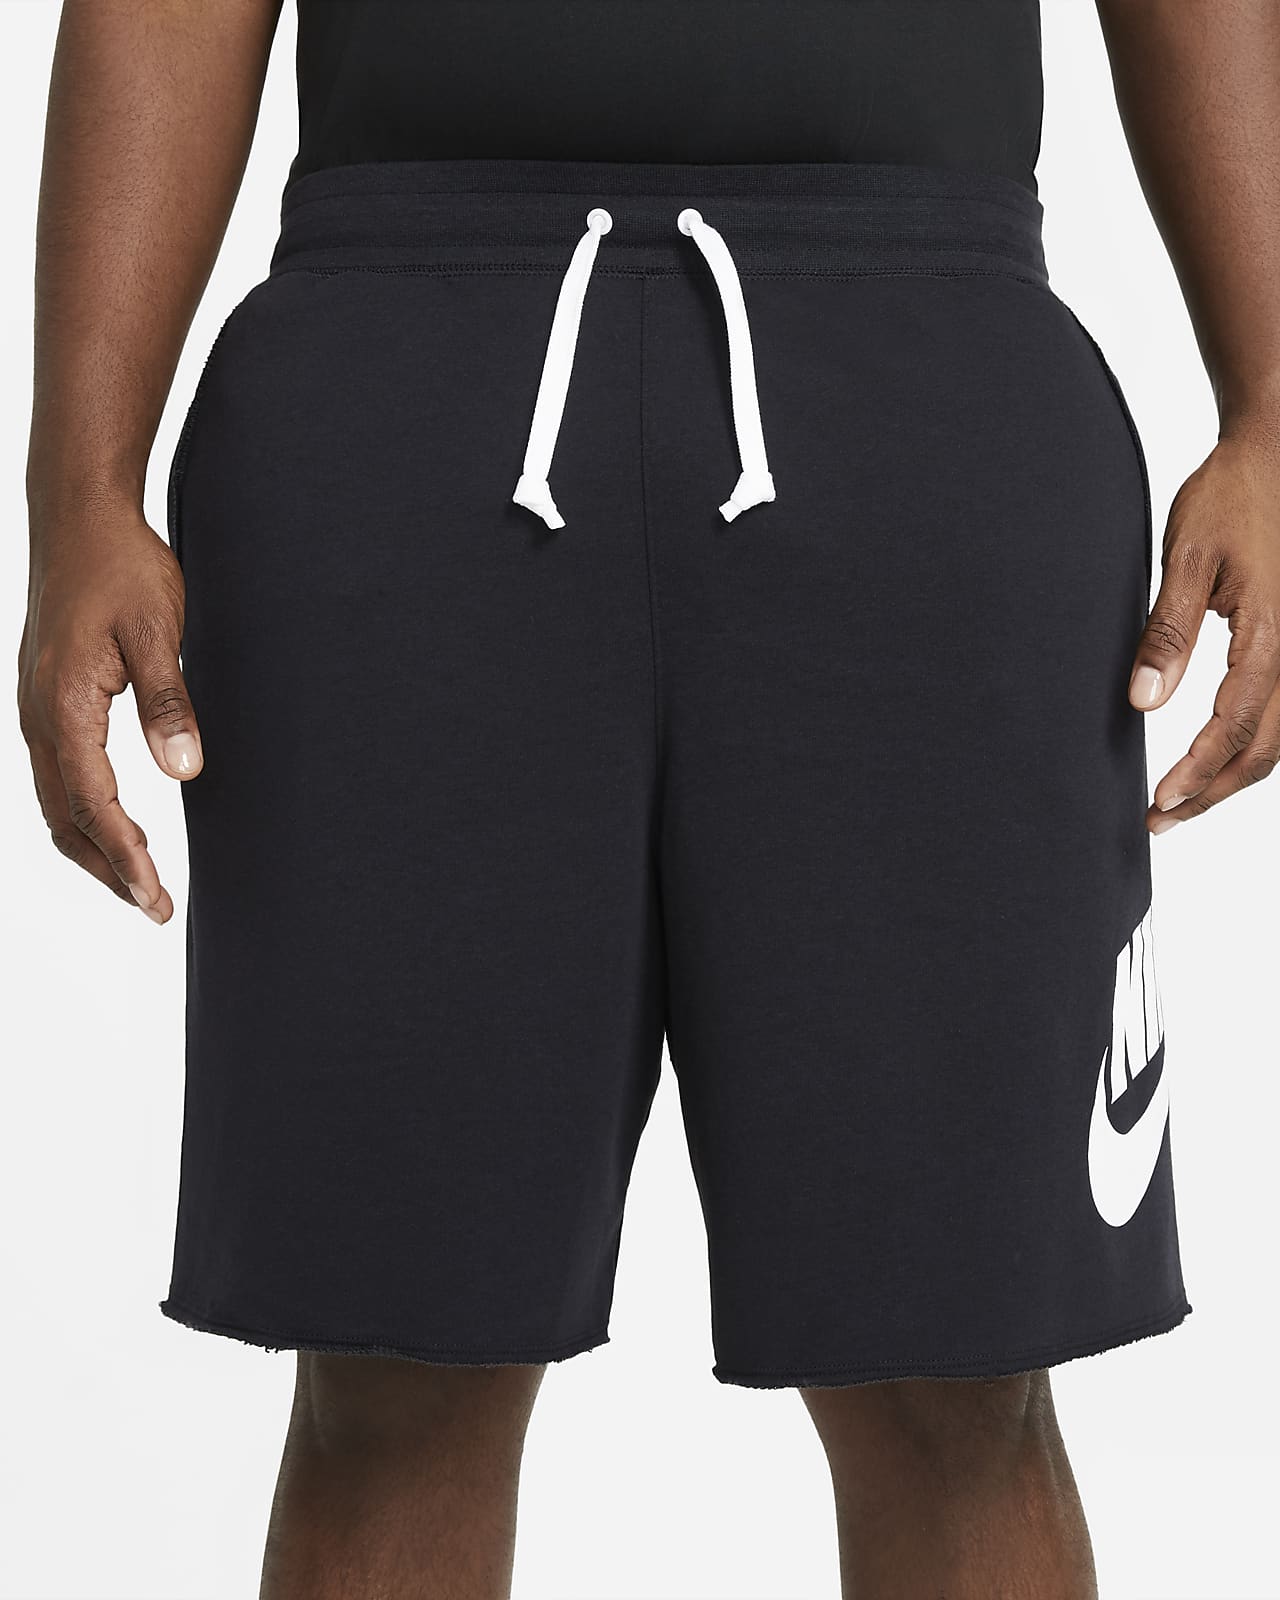 nike sportswear men's alumni shorts stores